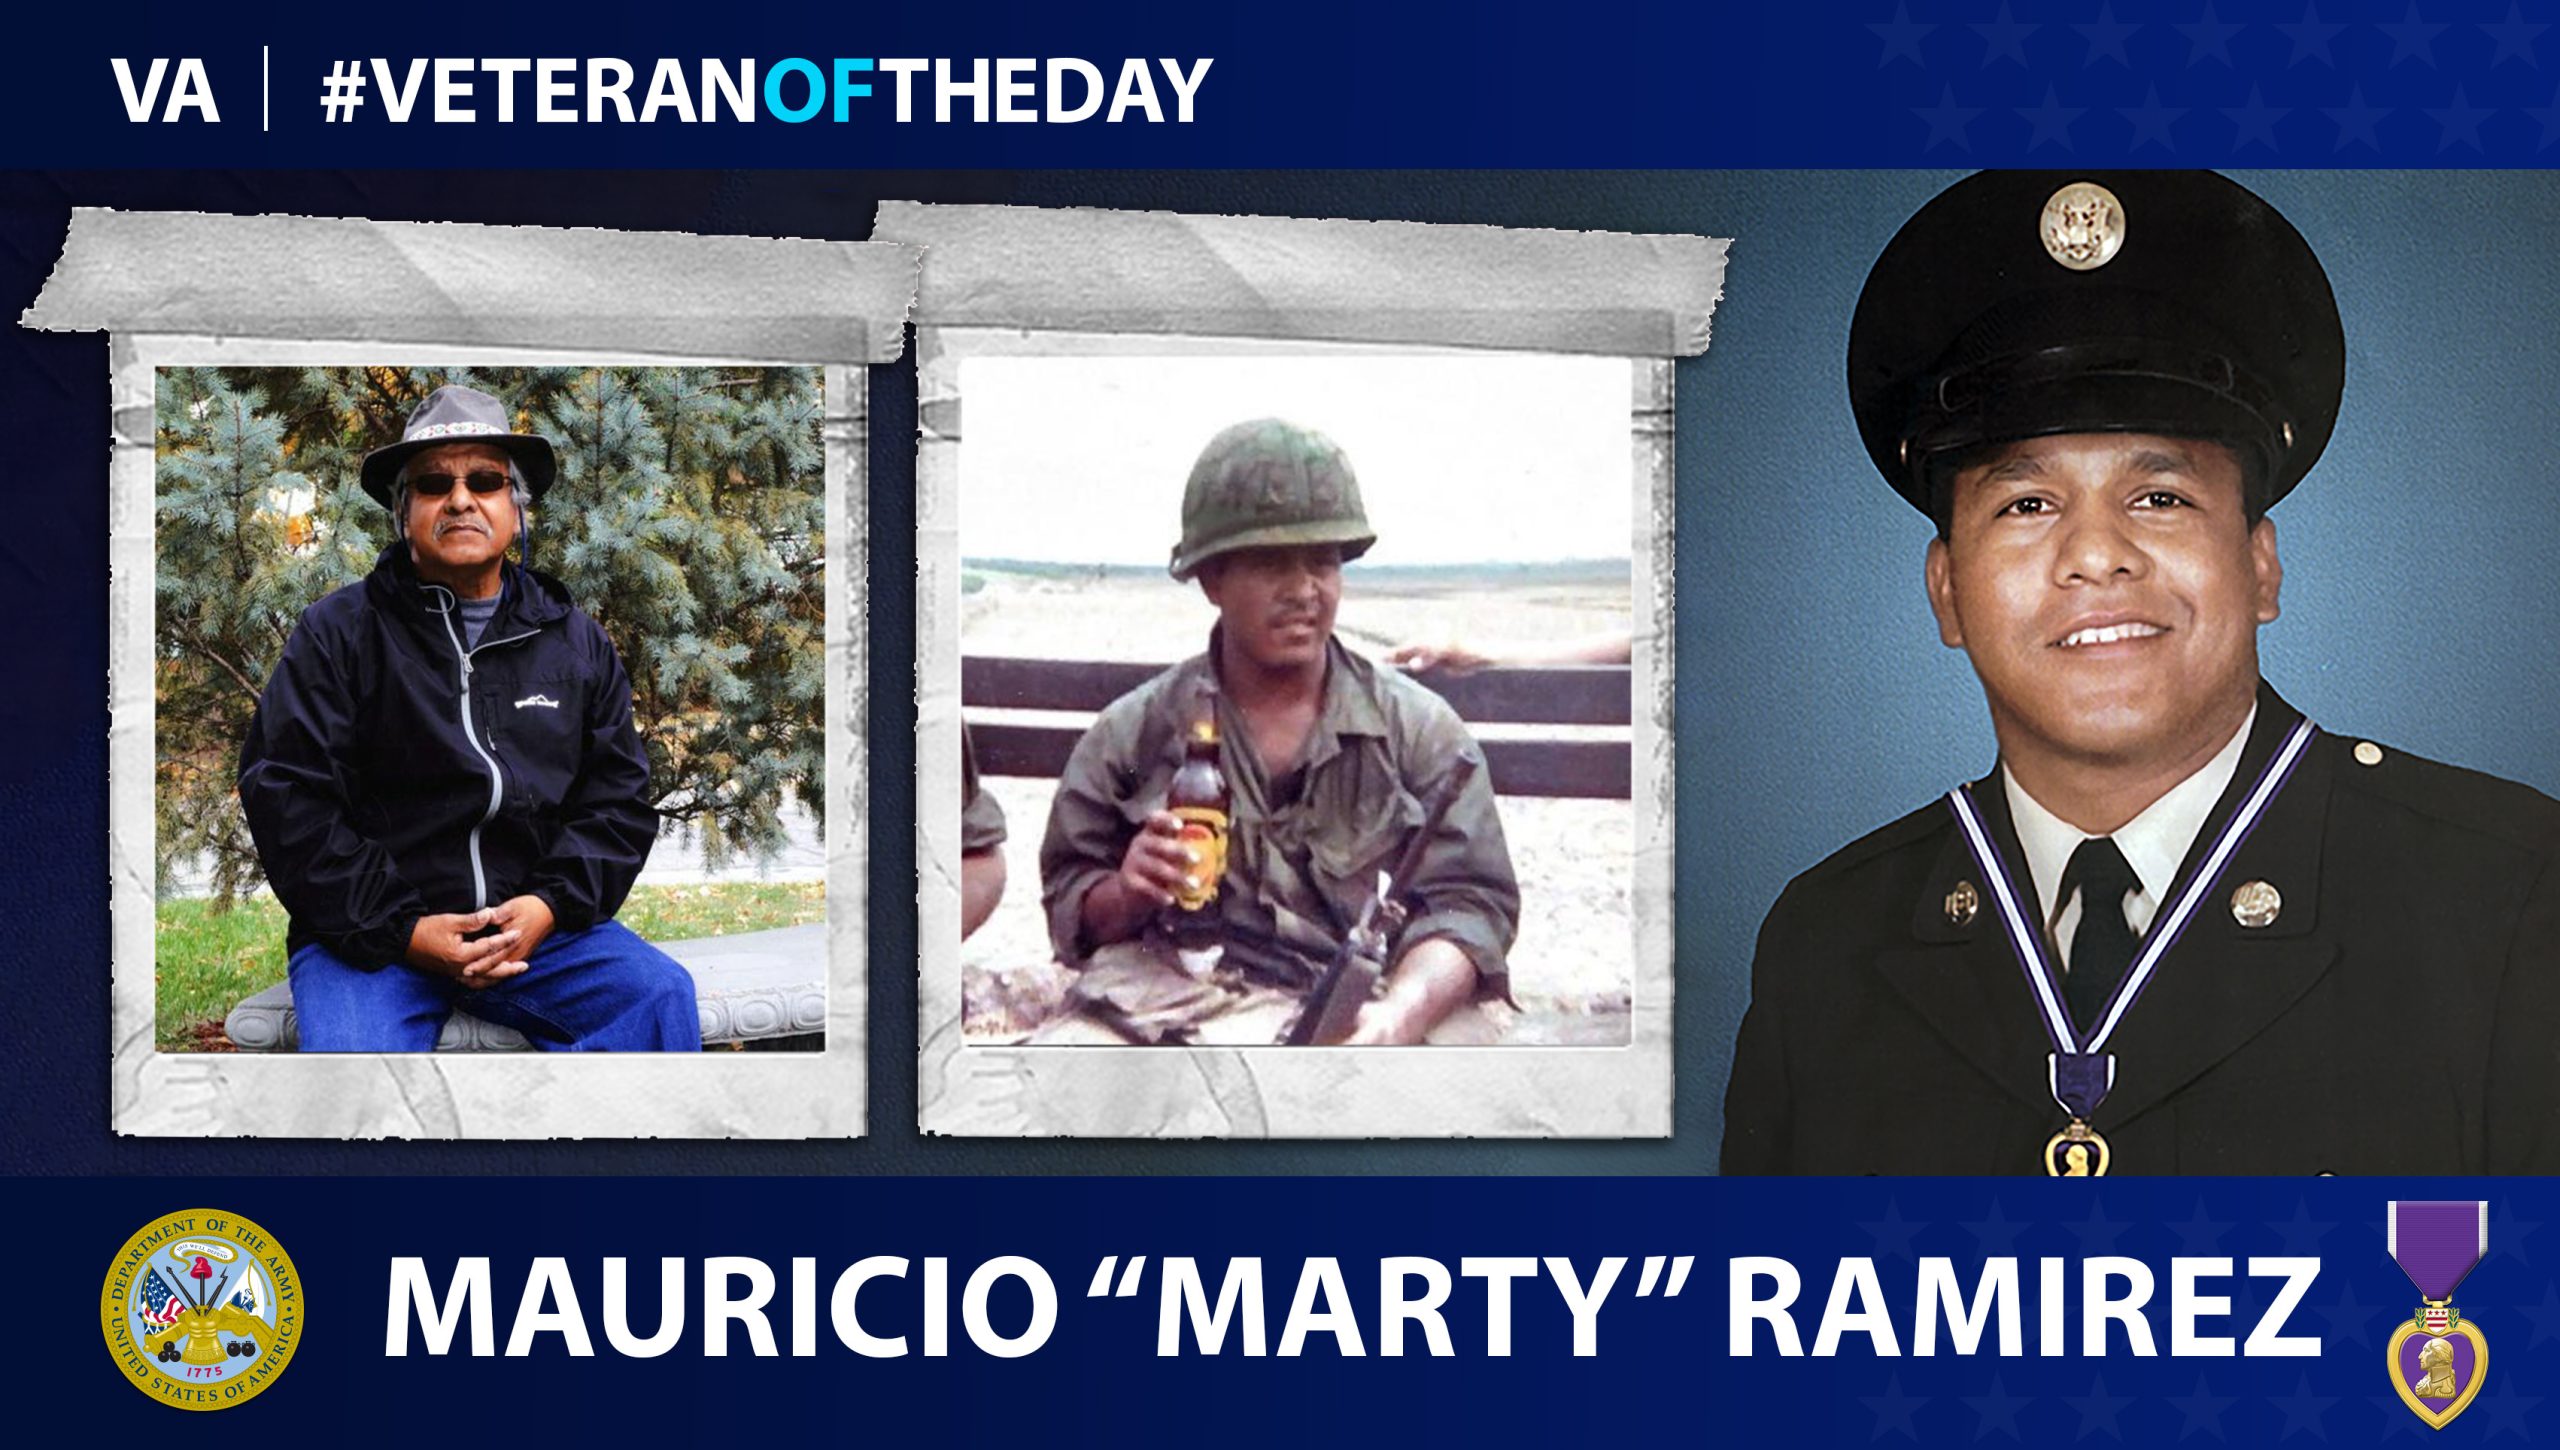 Army Veteran Mauricio “Marty” Ramirez is today's Veteran of the Day.